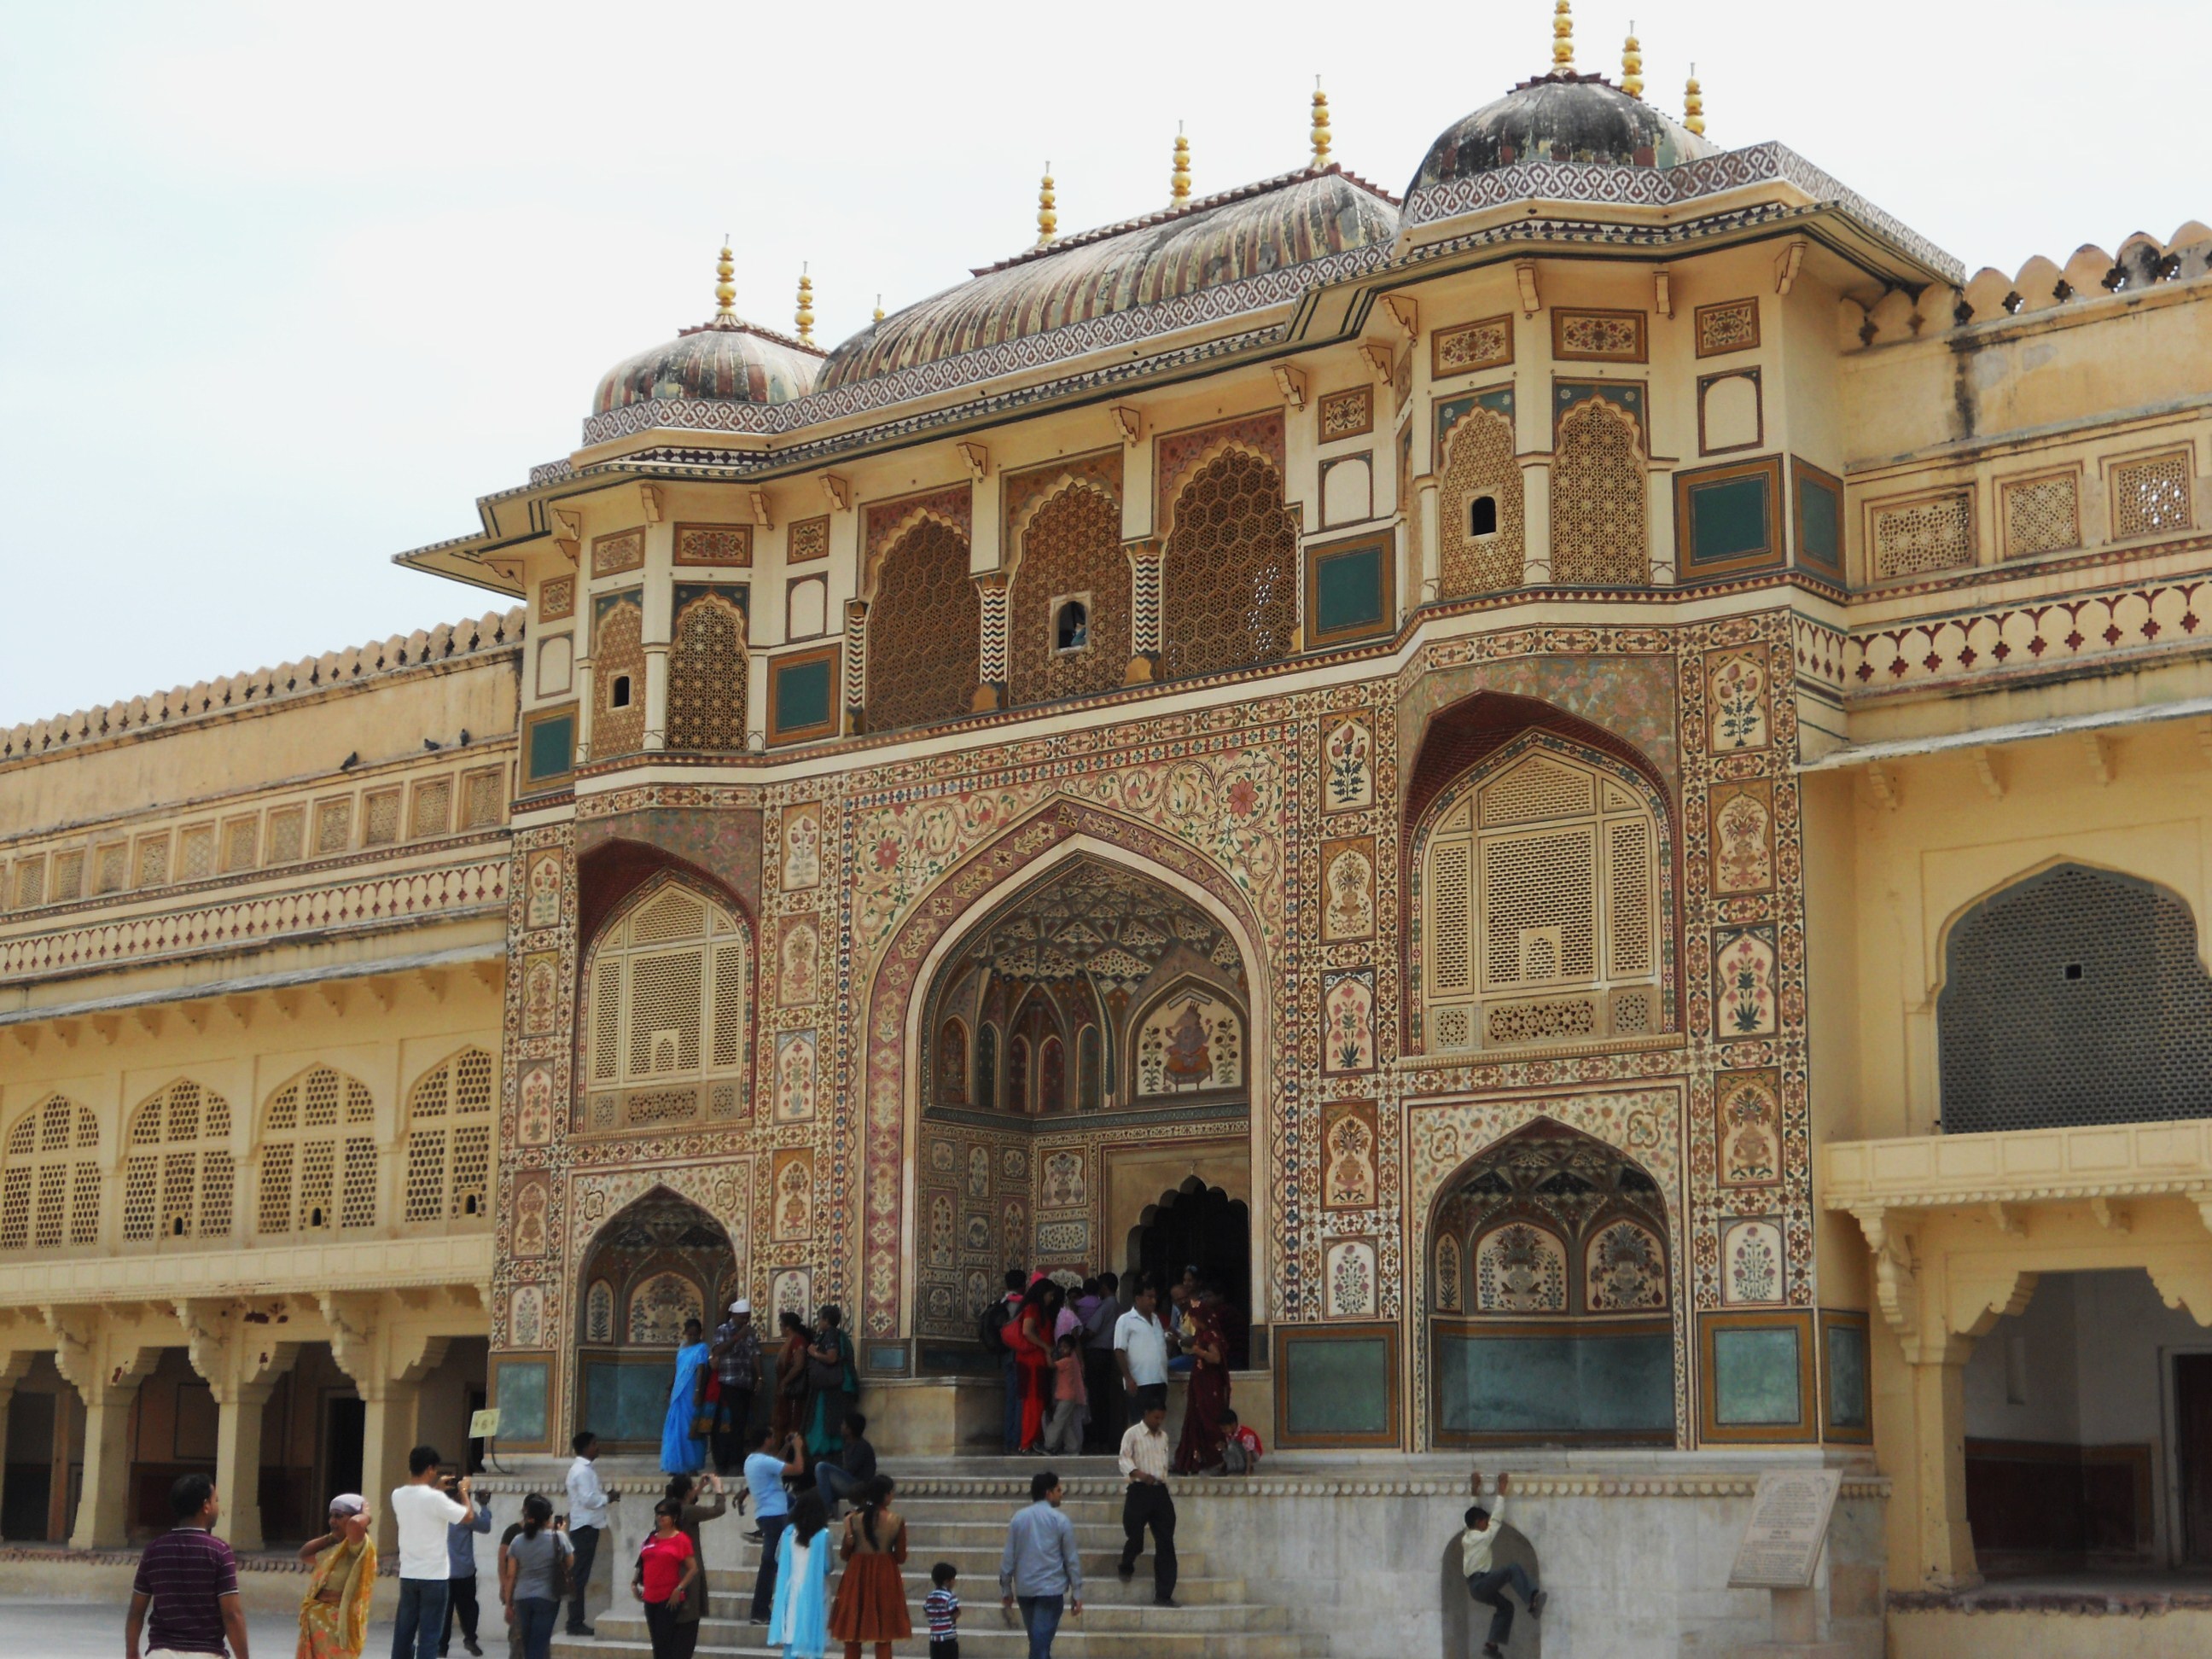 Entrance to Palace in Jaipur, Rajasthan